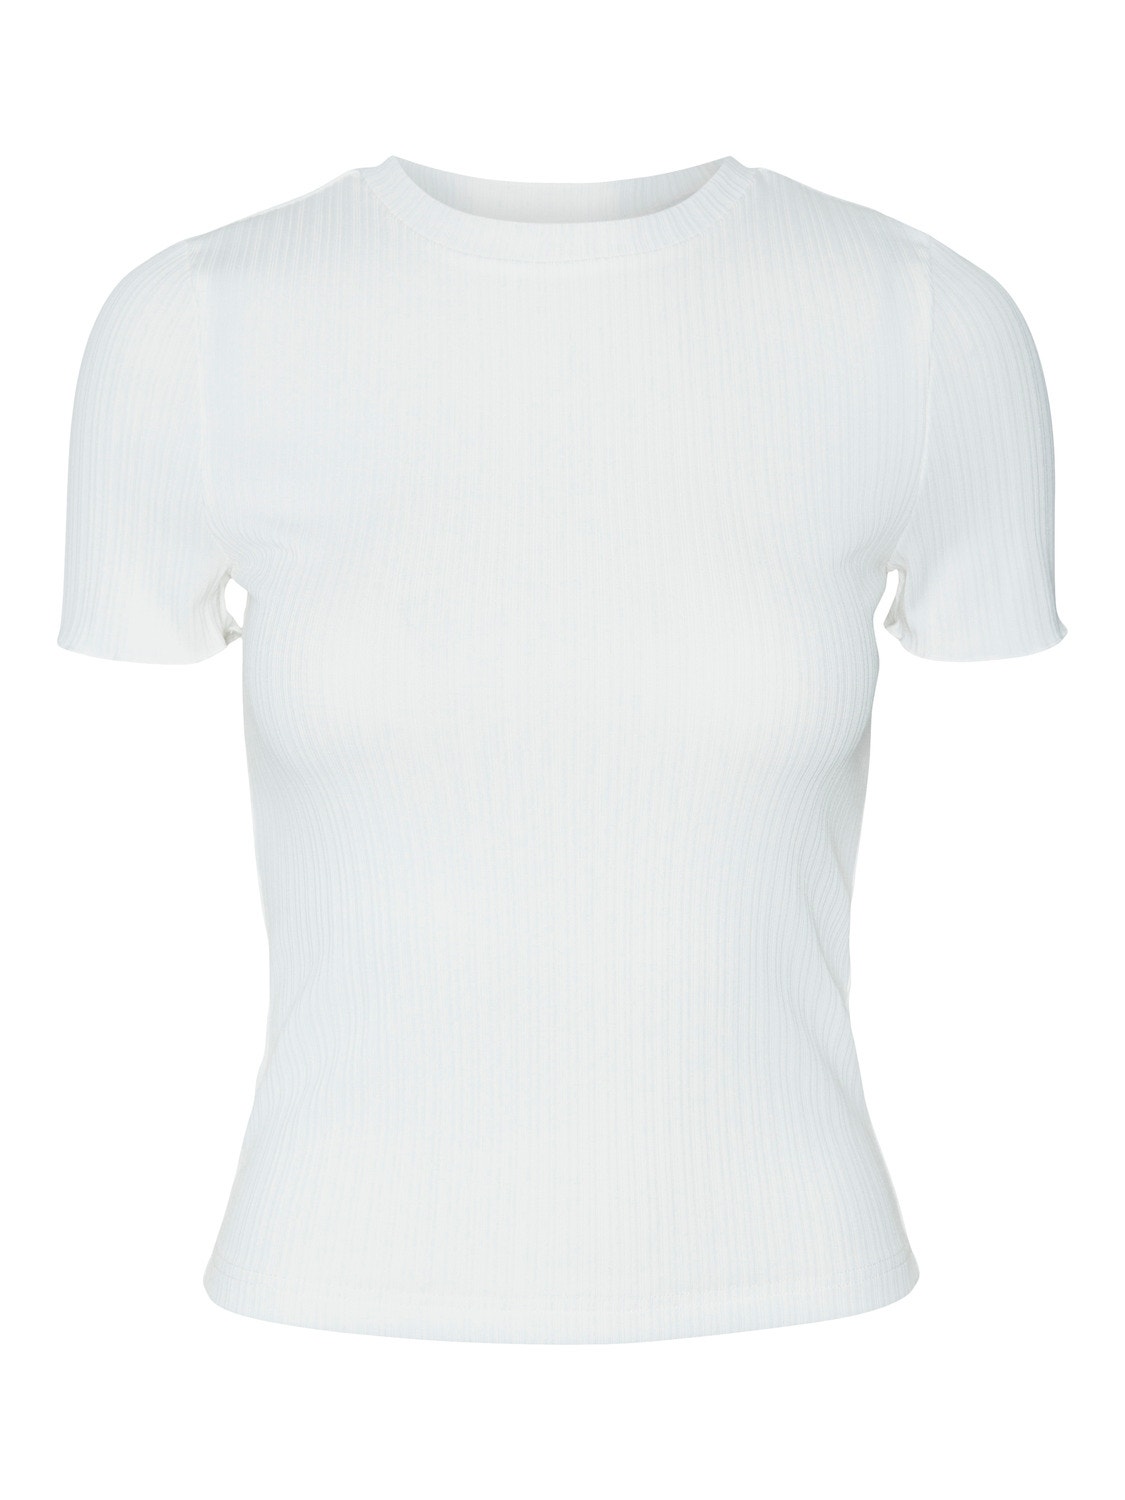 Vero Moda SOMETHING NEW PROJECT; CHLOE FRATER T-shirt -Snow White - 10306599